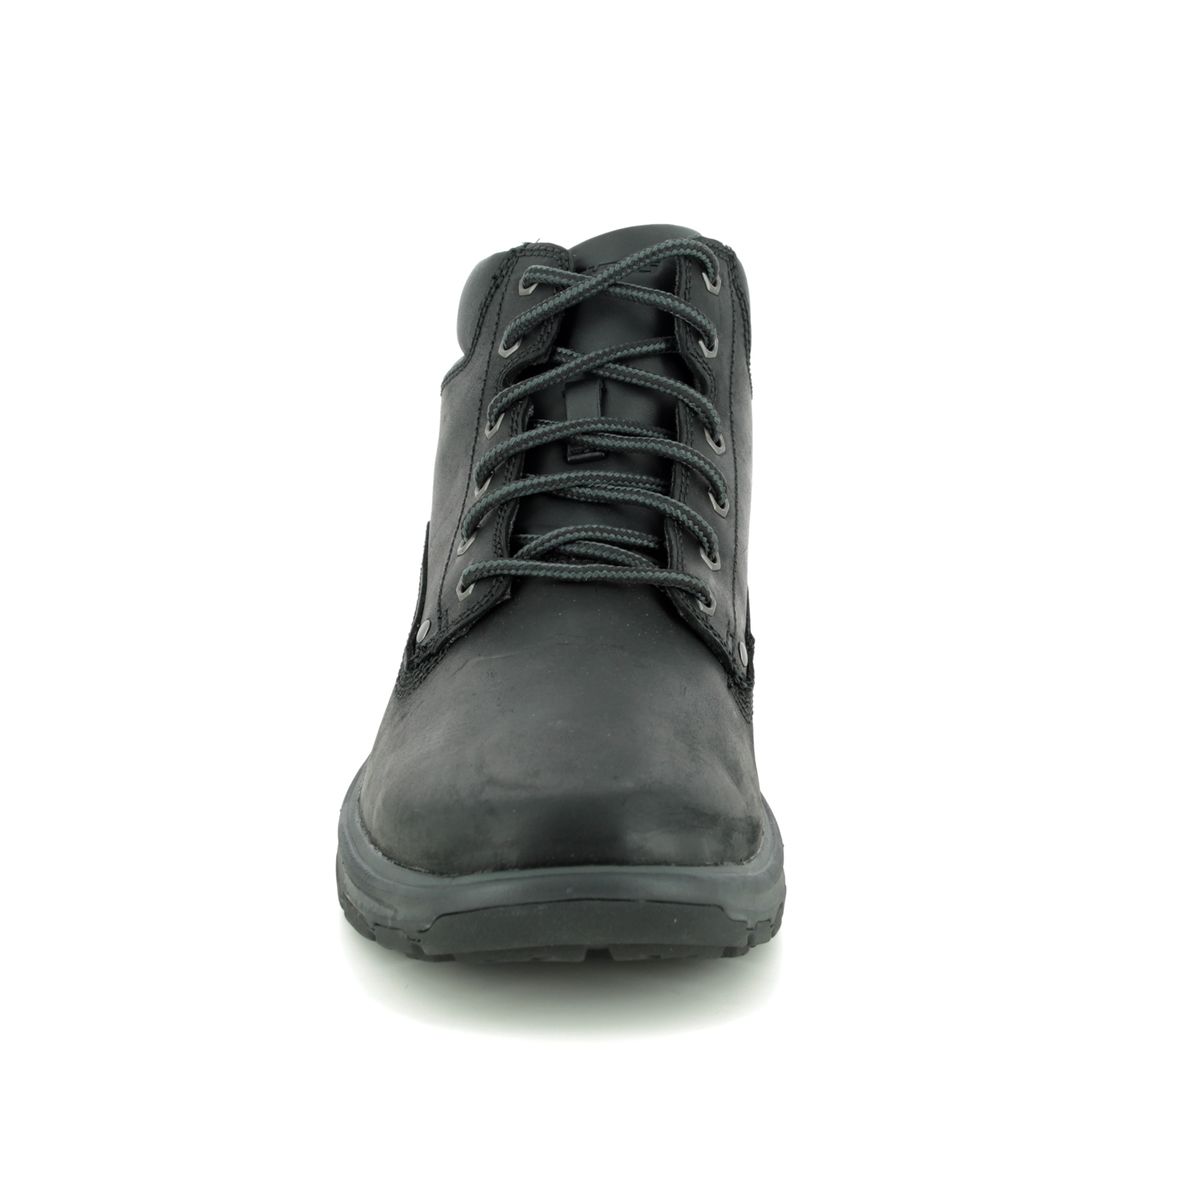 Skechers Segment Garnet Relaxed Fit 65573 BBK Black boots